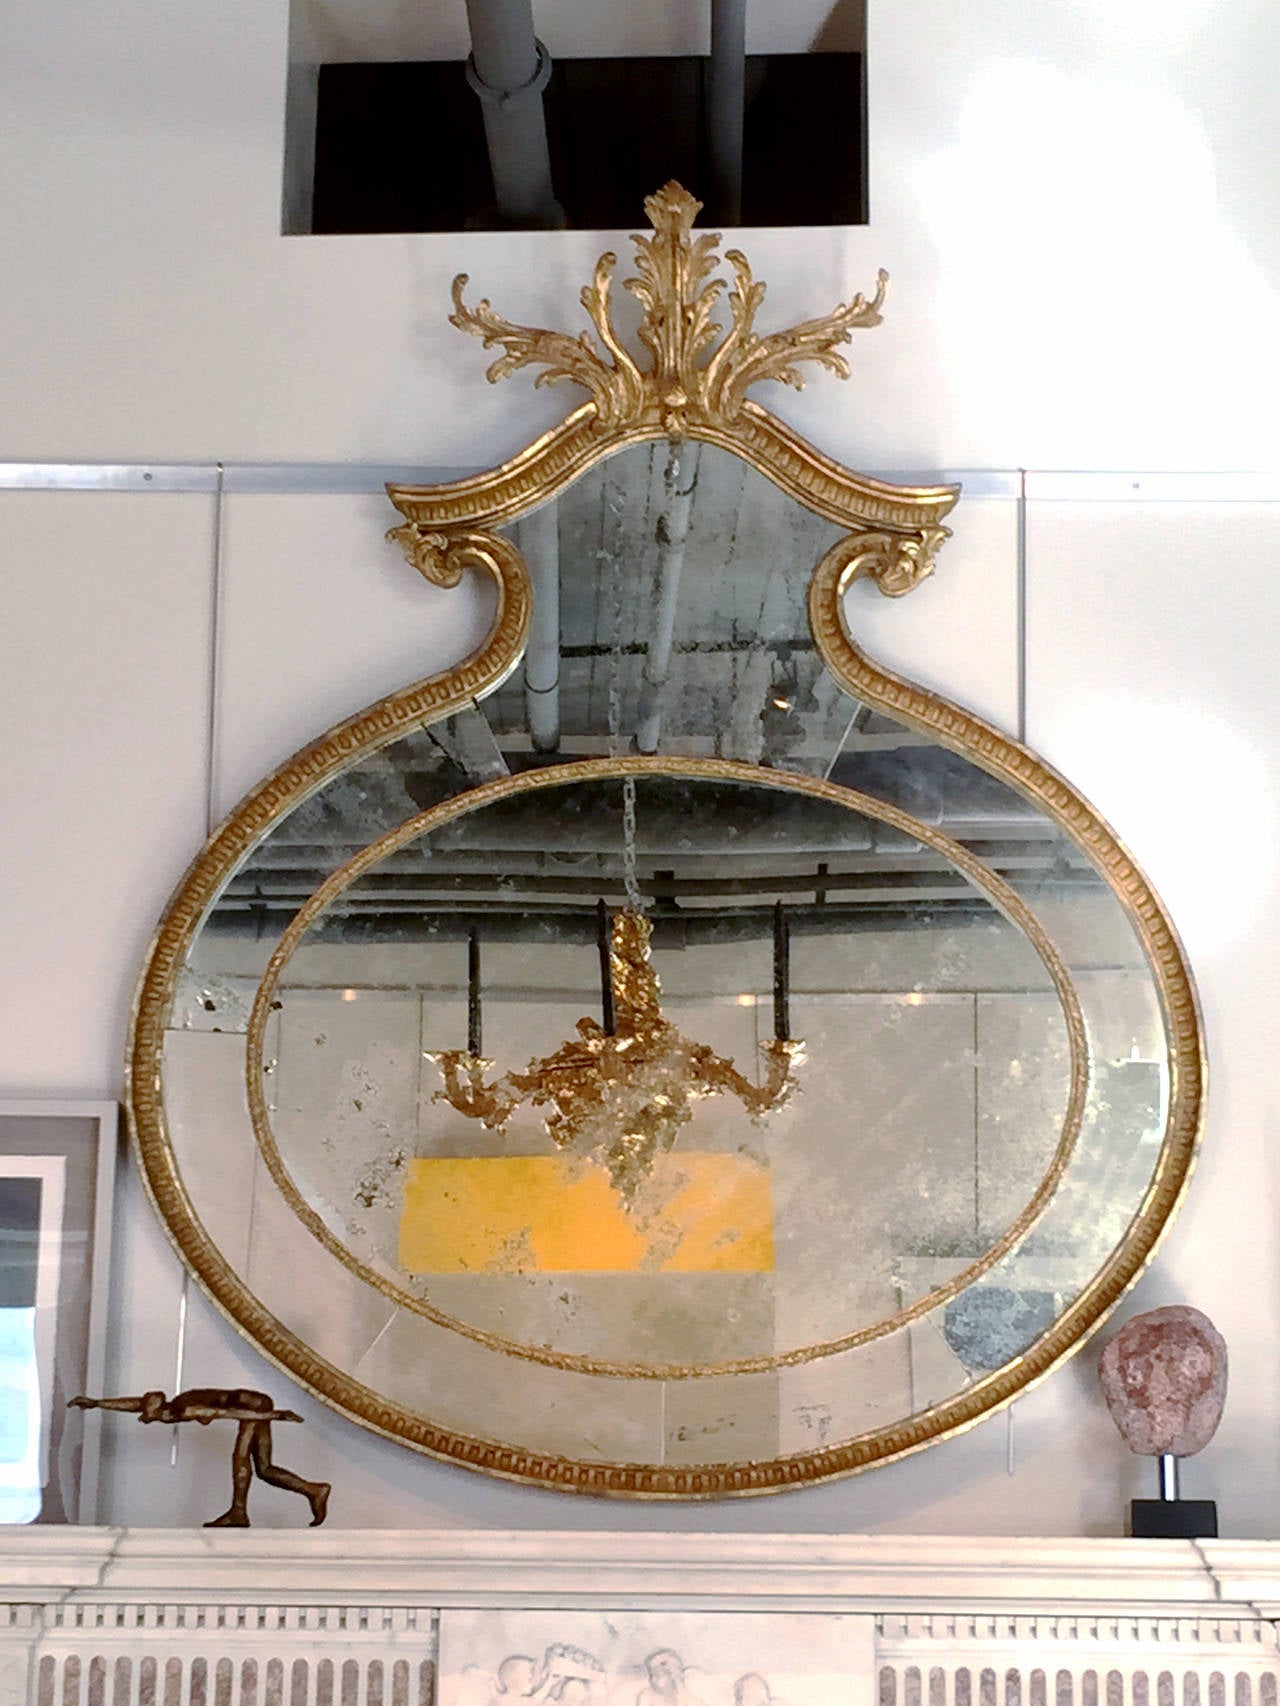 Unusual Adam Oval Giltwood Mirror
English, circa 1775